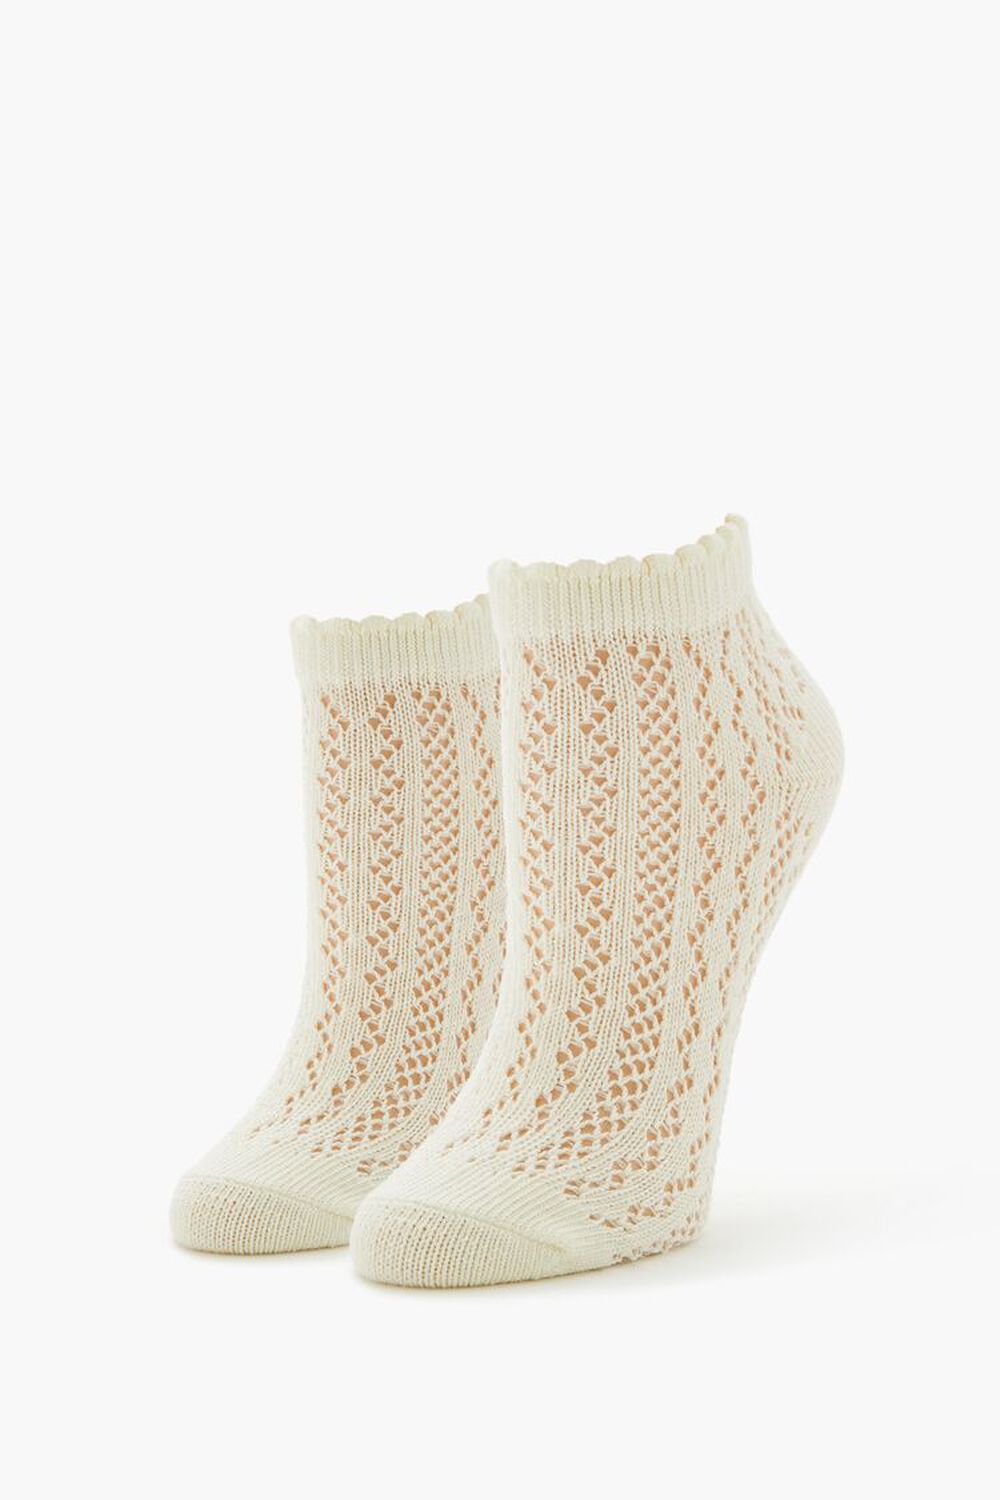 CREAM Scalloped Open-Knit Ankle Socks, image 1